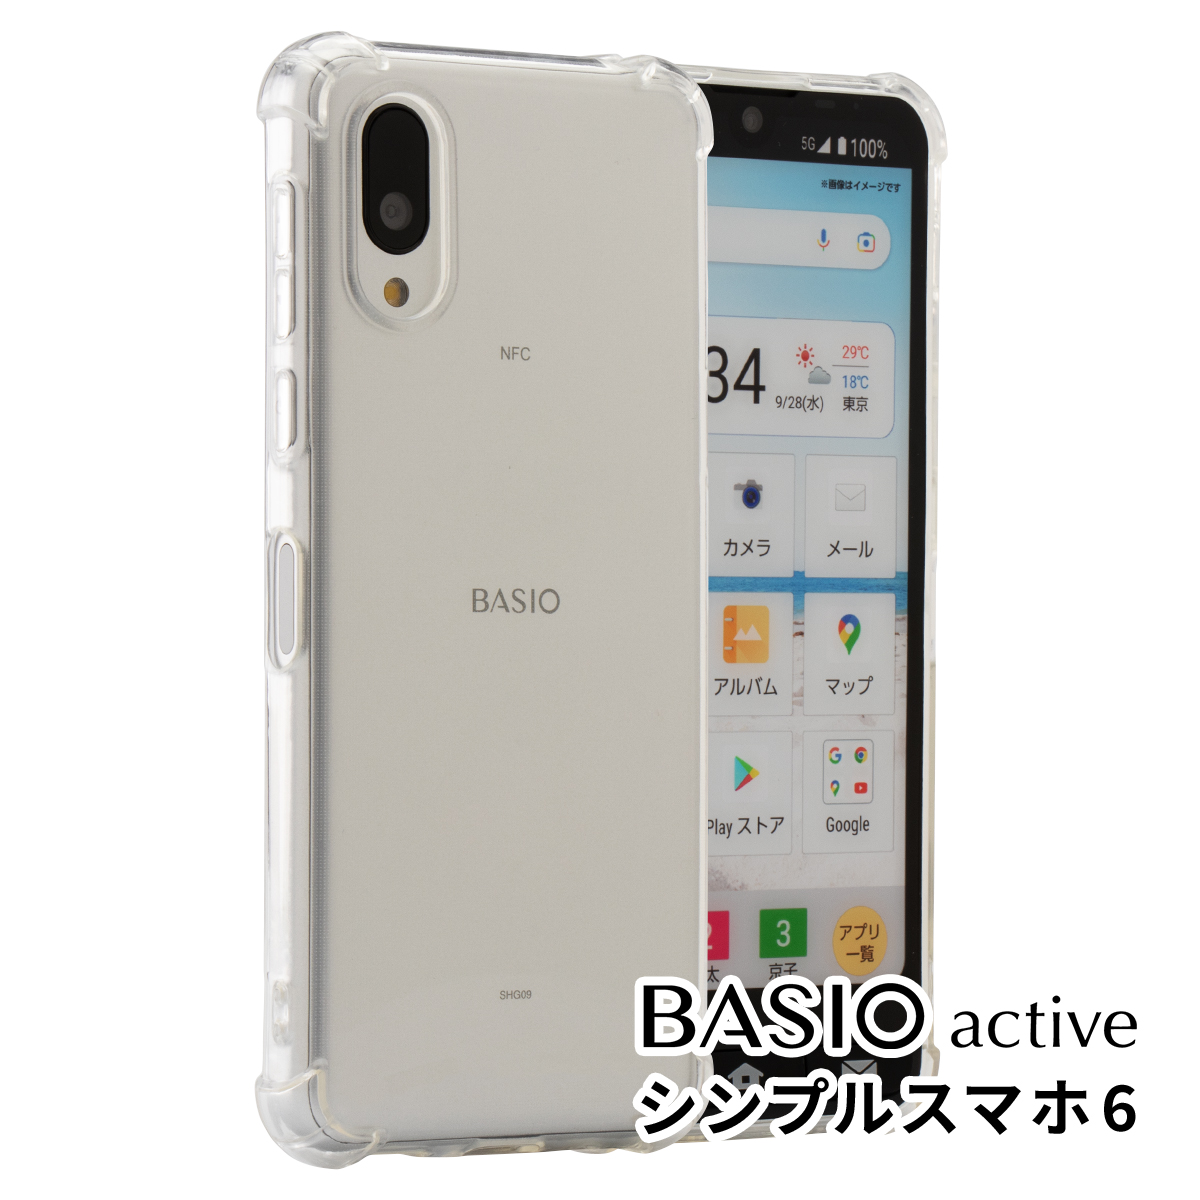 BASIO active SHG09 シンプルスマホ6 耐衝撃TPUクリアケース